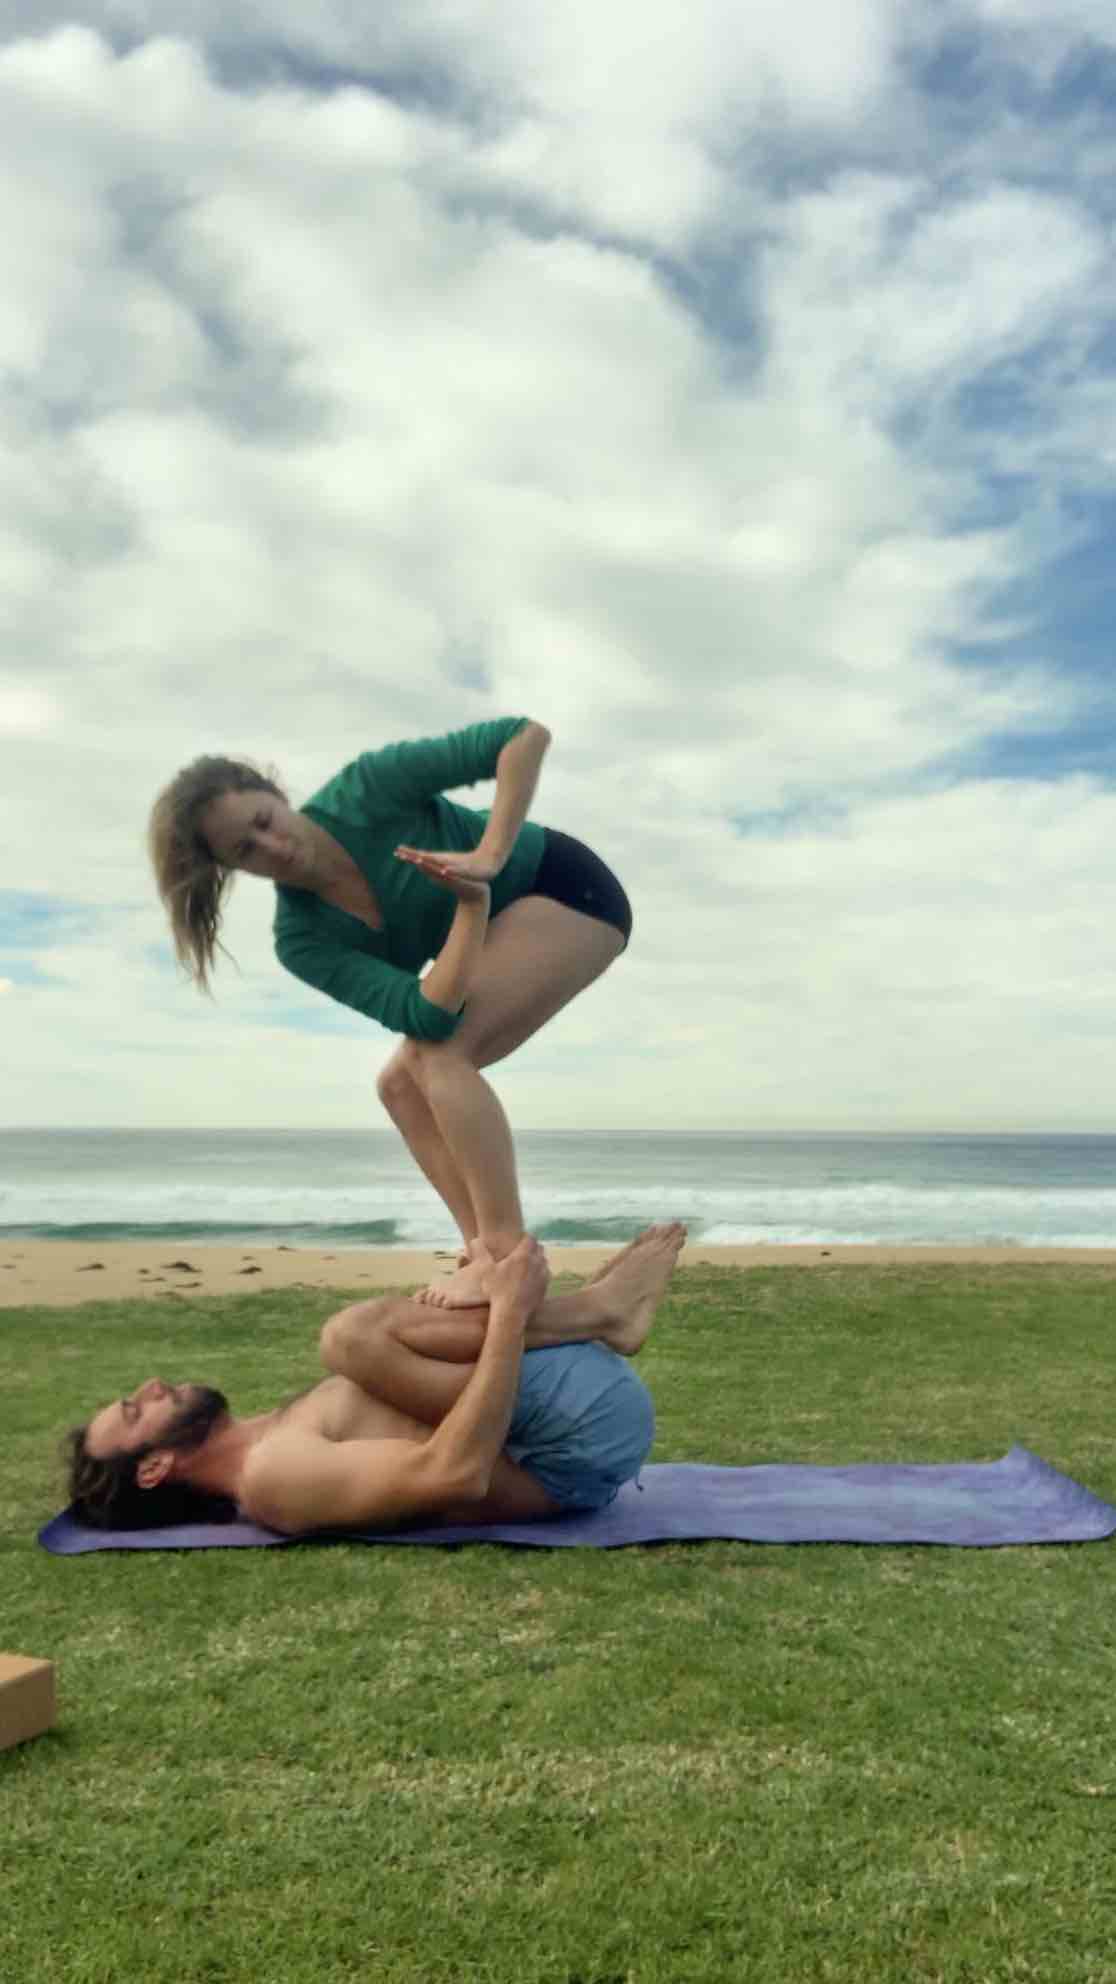 A couple doing acro yoga